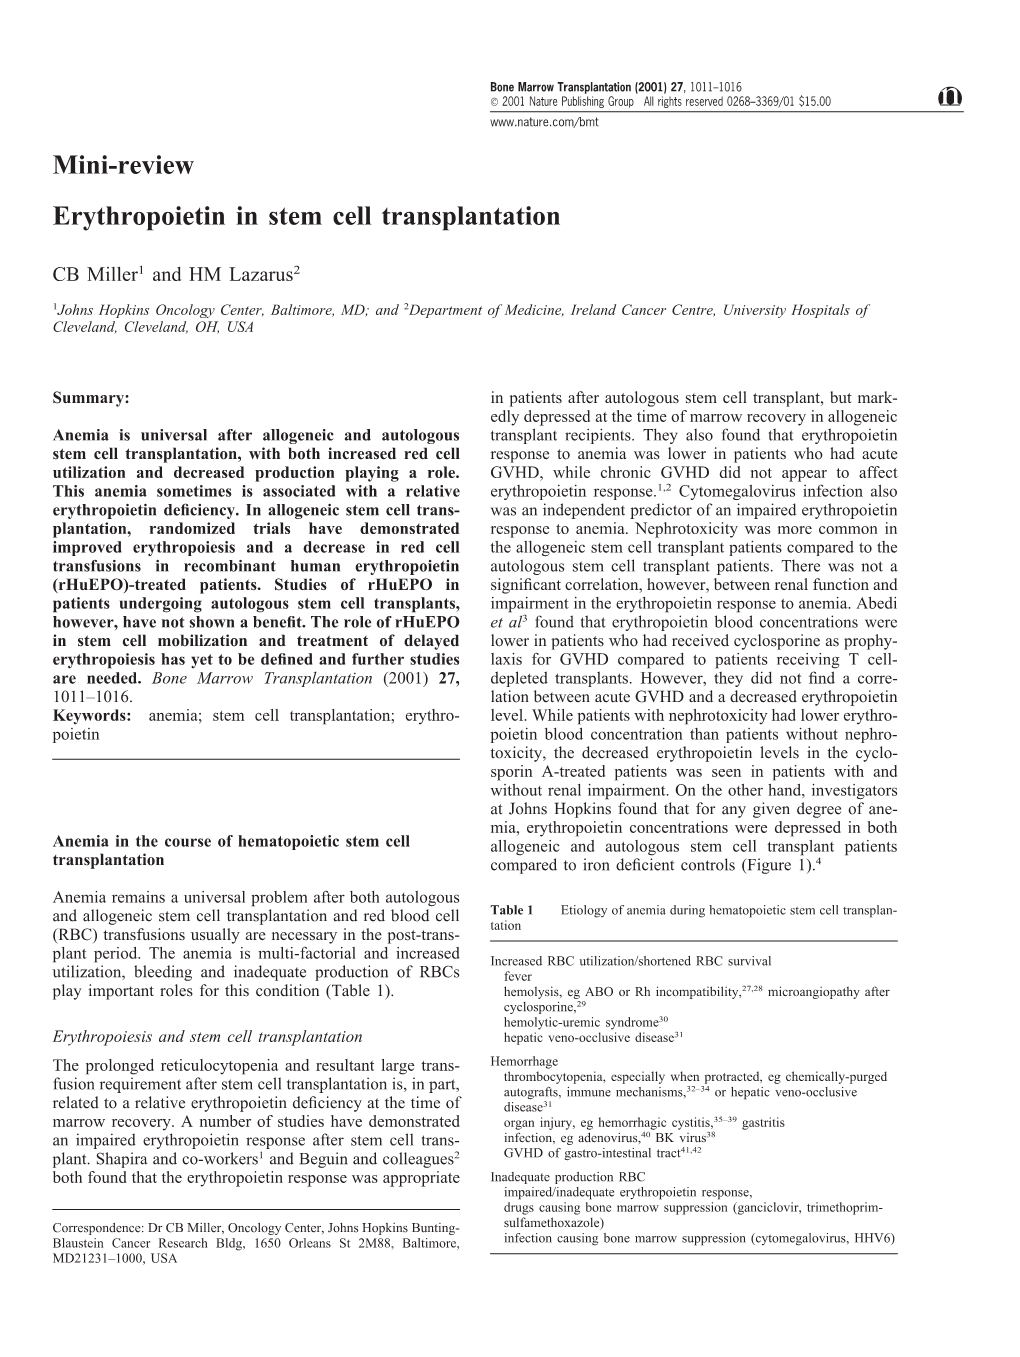 Mini-Review Erythropoietin in Stem Cell Transplantation